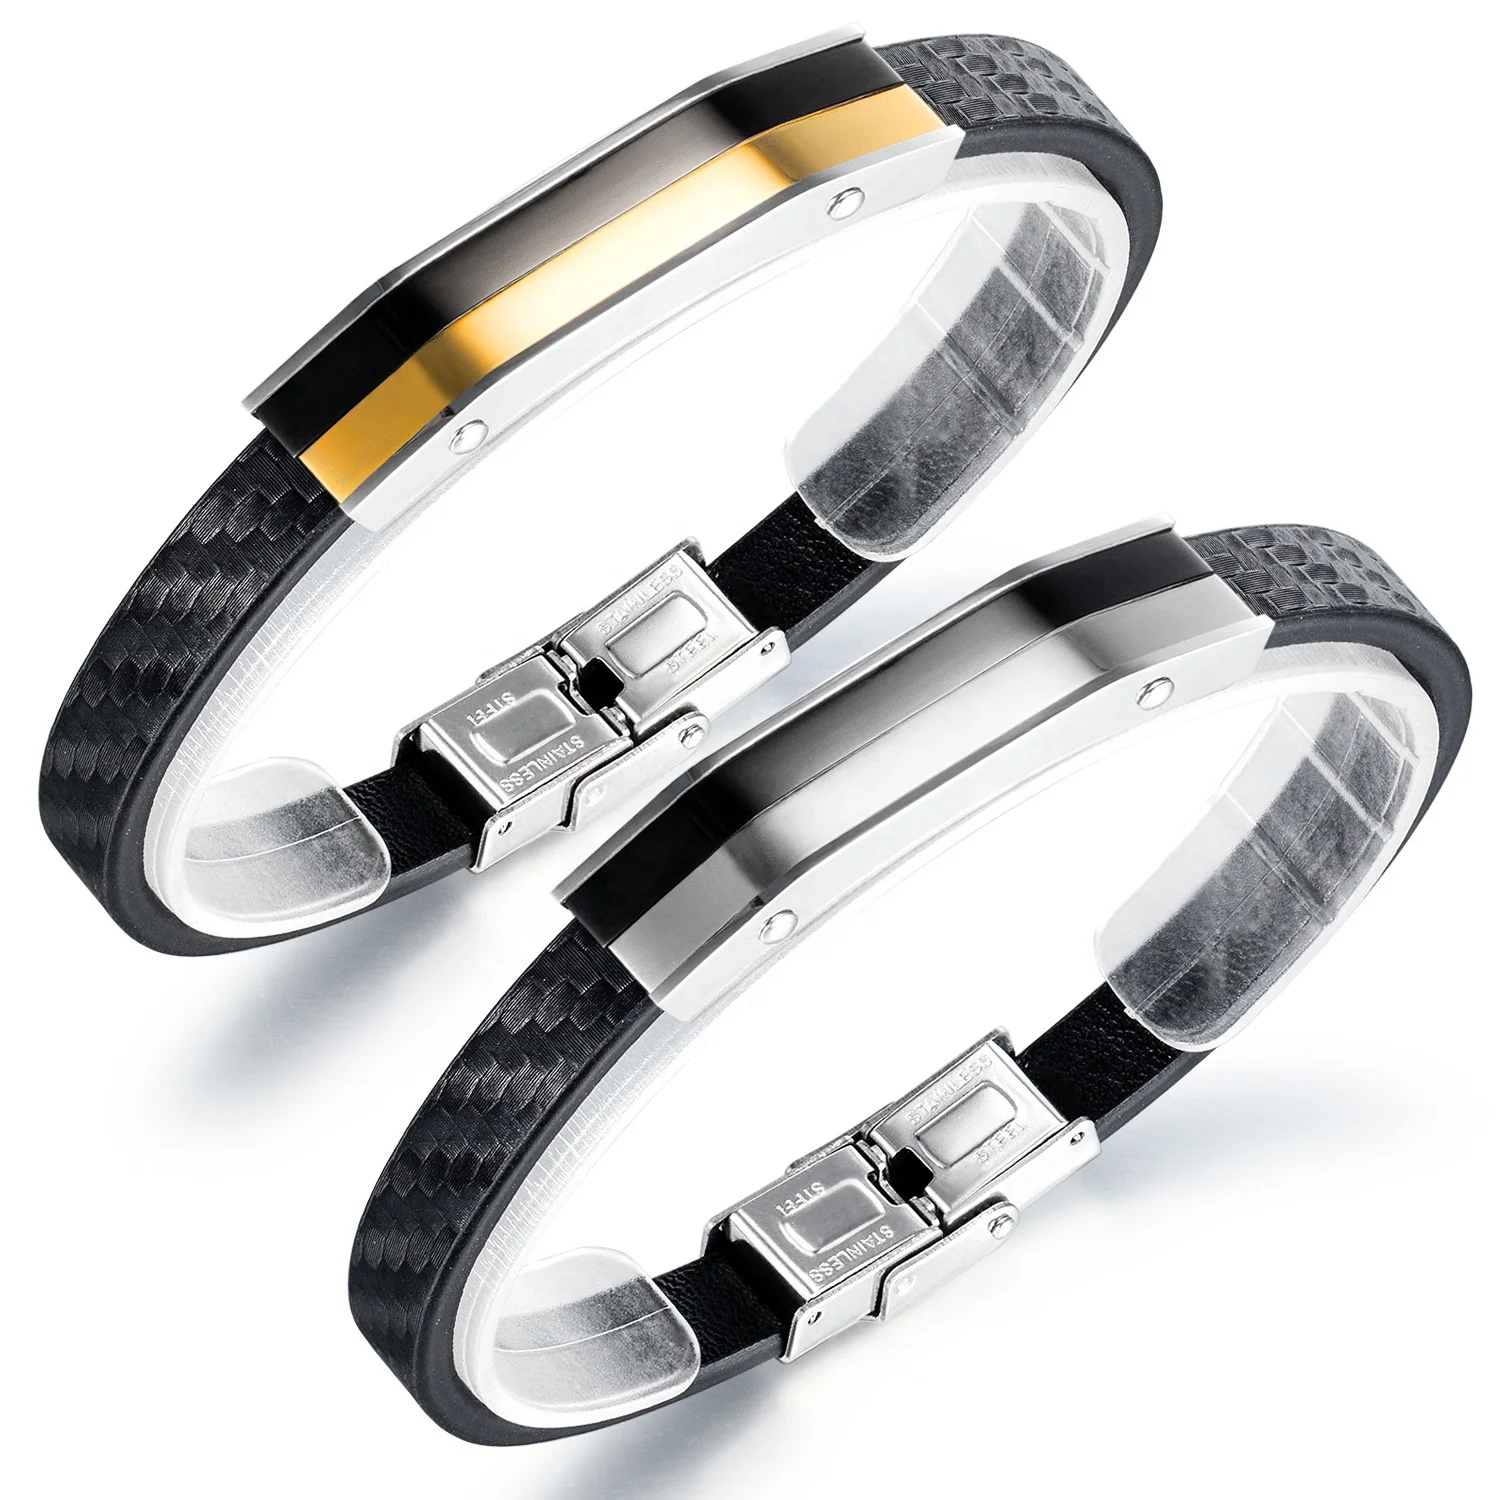 

OEM/ODM Accept 100% Leather 316L Stainless Steel Luxury Men Bracelet, White, gold